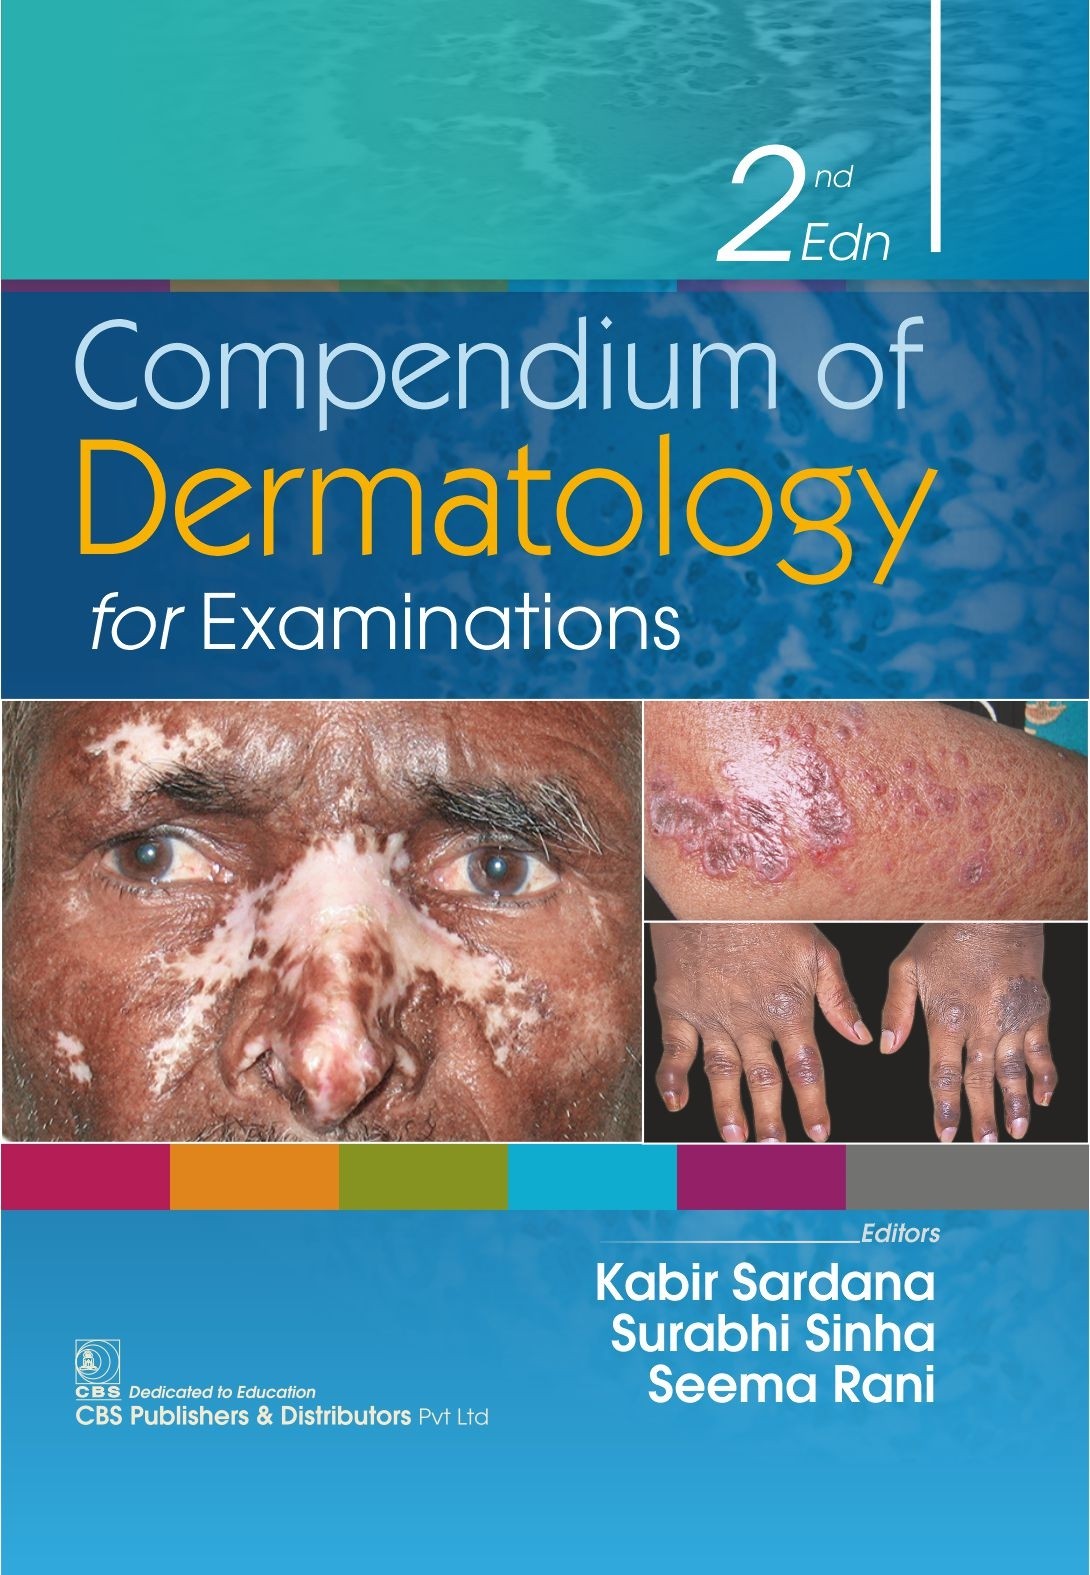 Compendium of Dermatology for Examinations